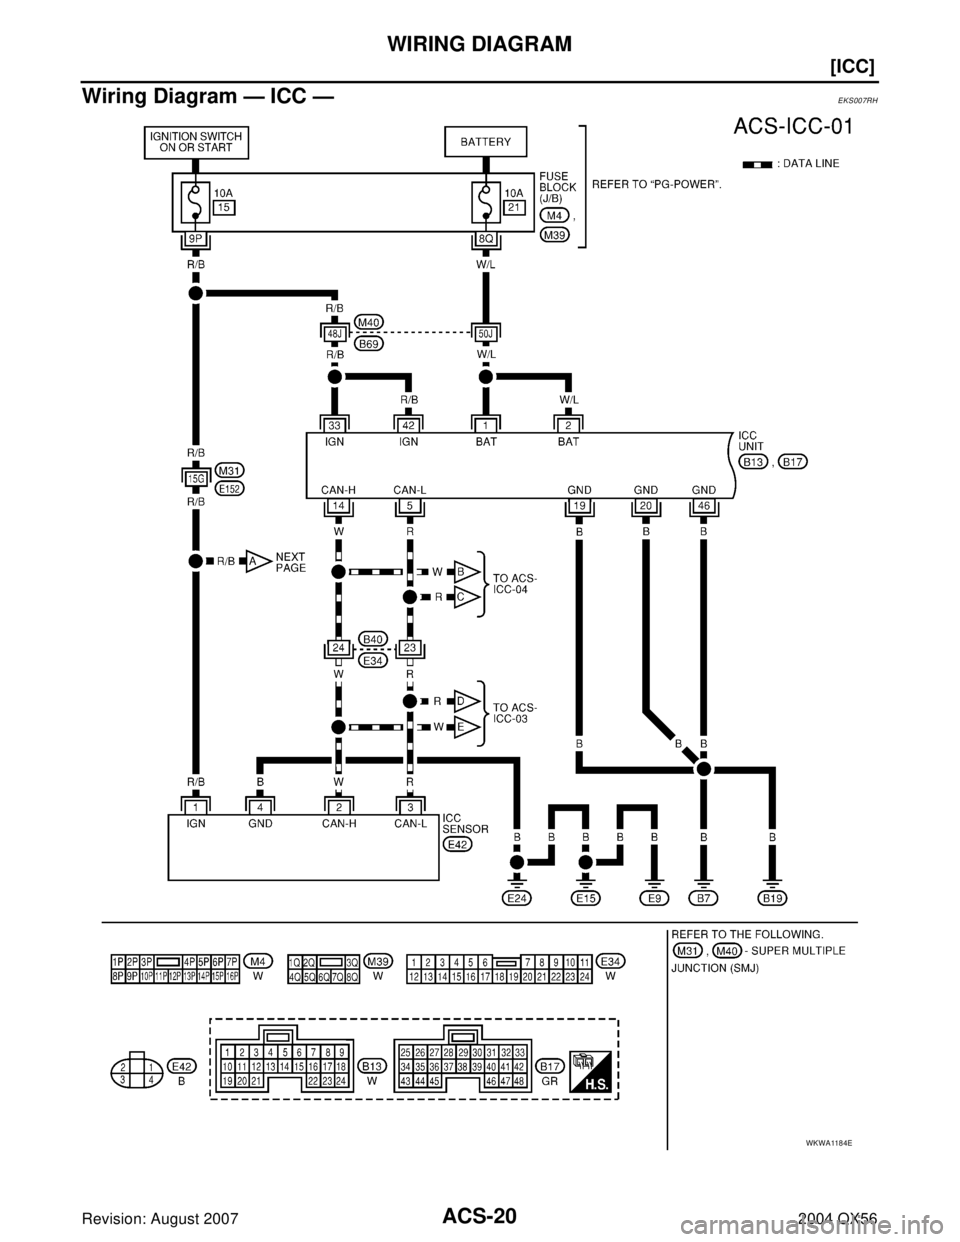 INFINITI QX56 2004  Factory Owners Manual ACS-20
[ICC]
WIRING DIAGRAM
Revision: August 20072004 QX56
Wiring Diagram — ICC —EKS007RH
WKWA1184E 